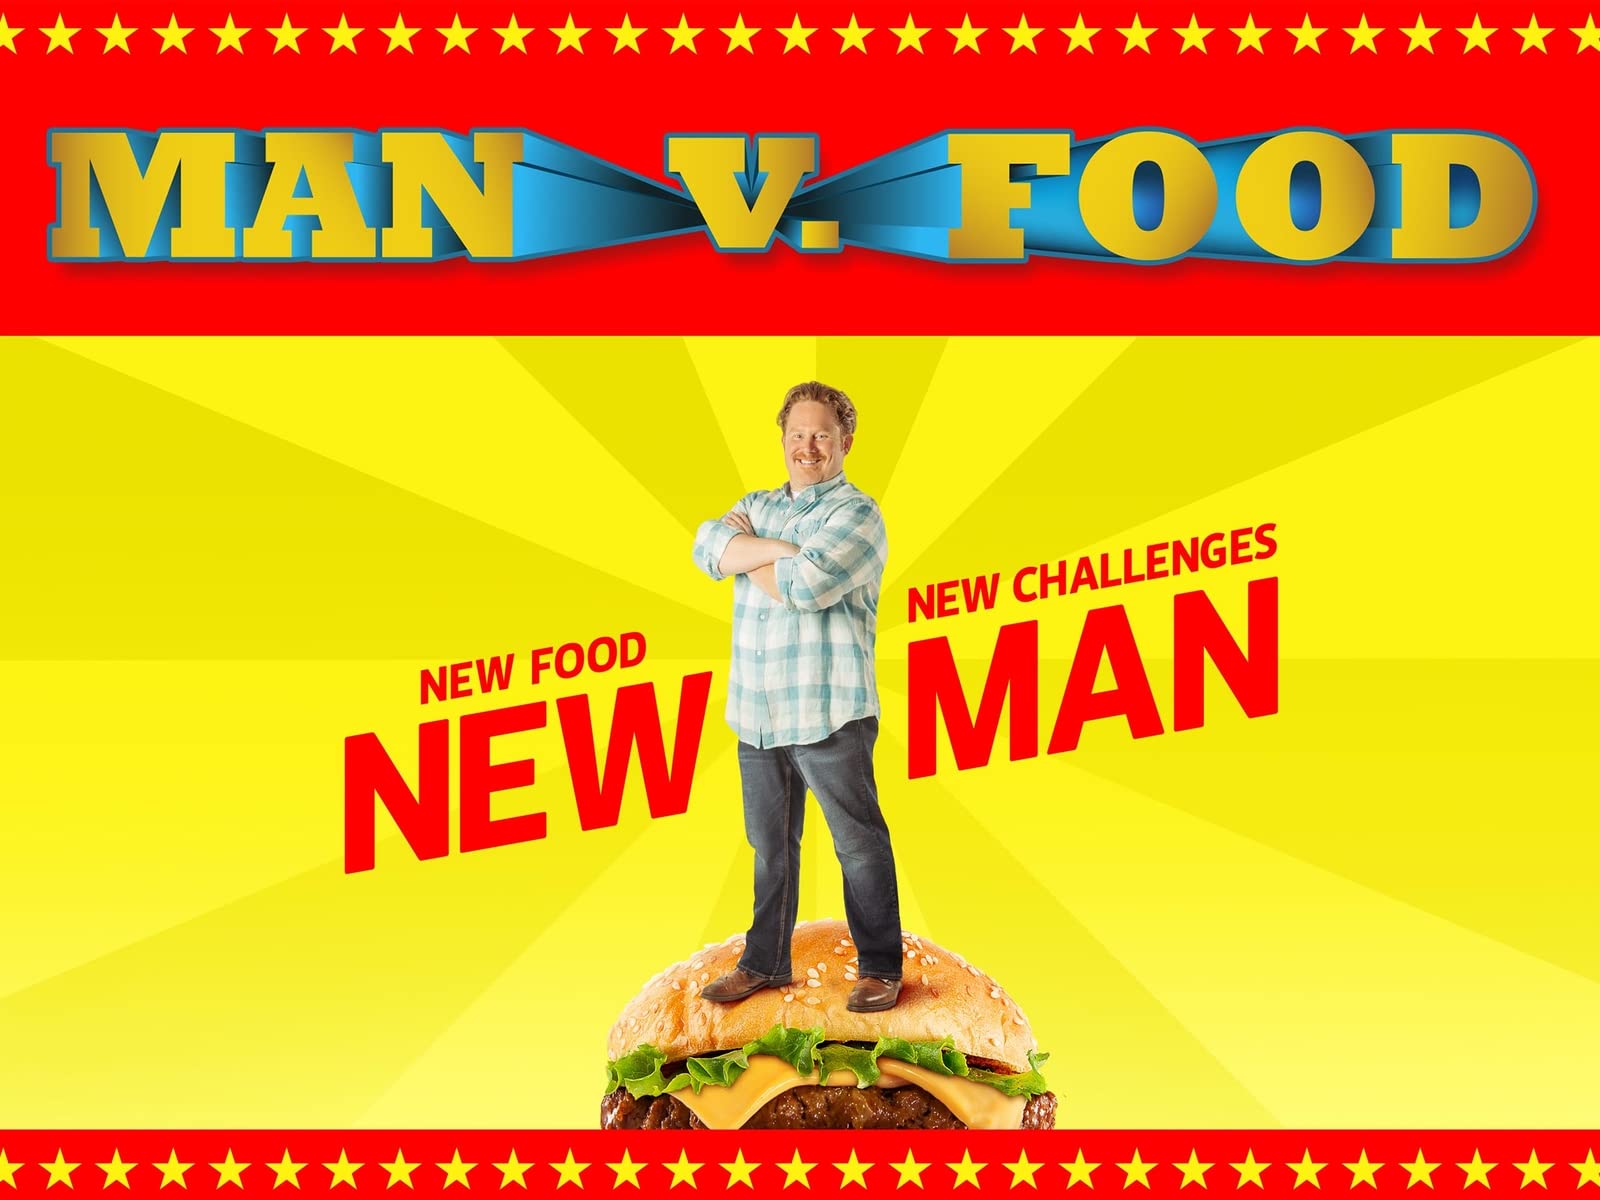 Man V. Food Wallpapers